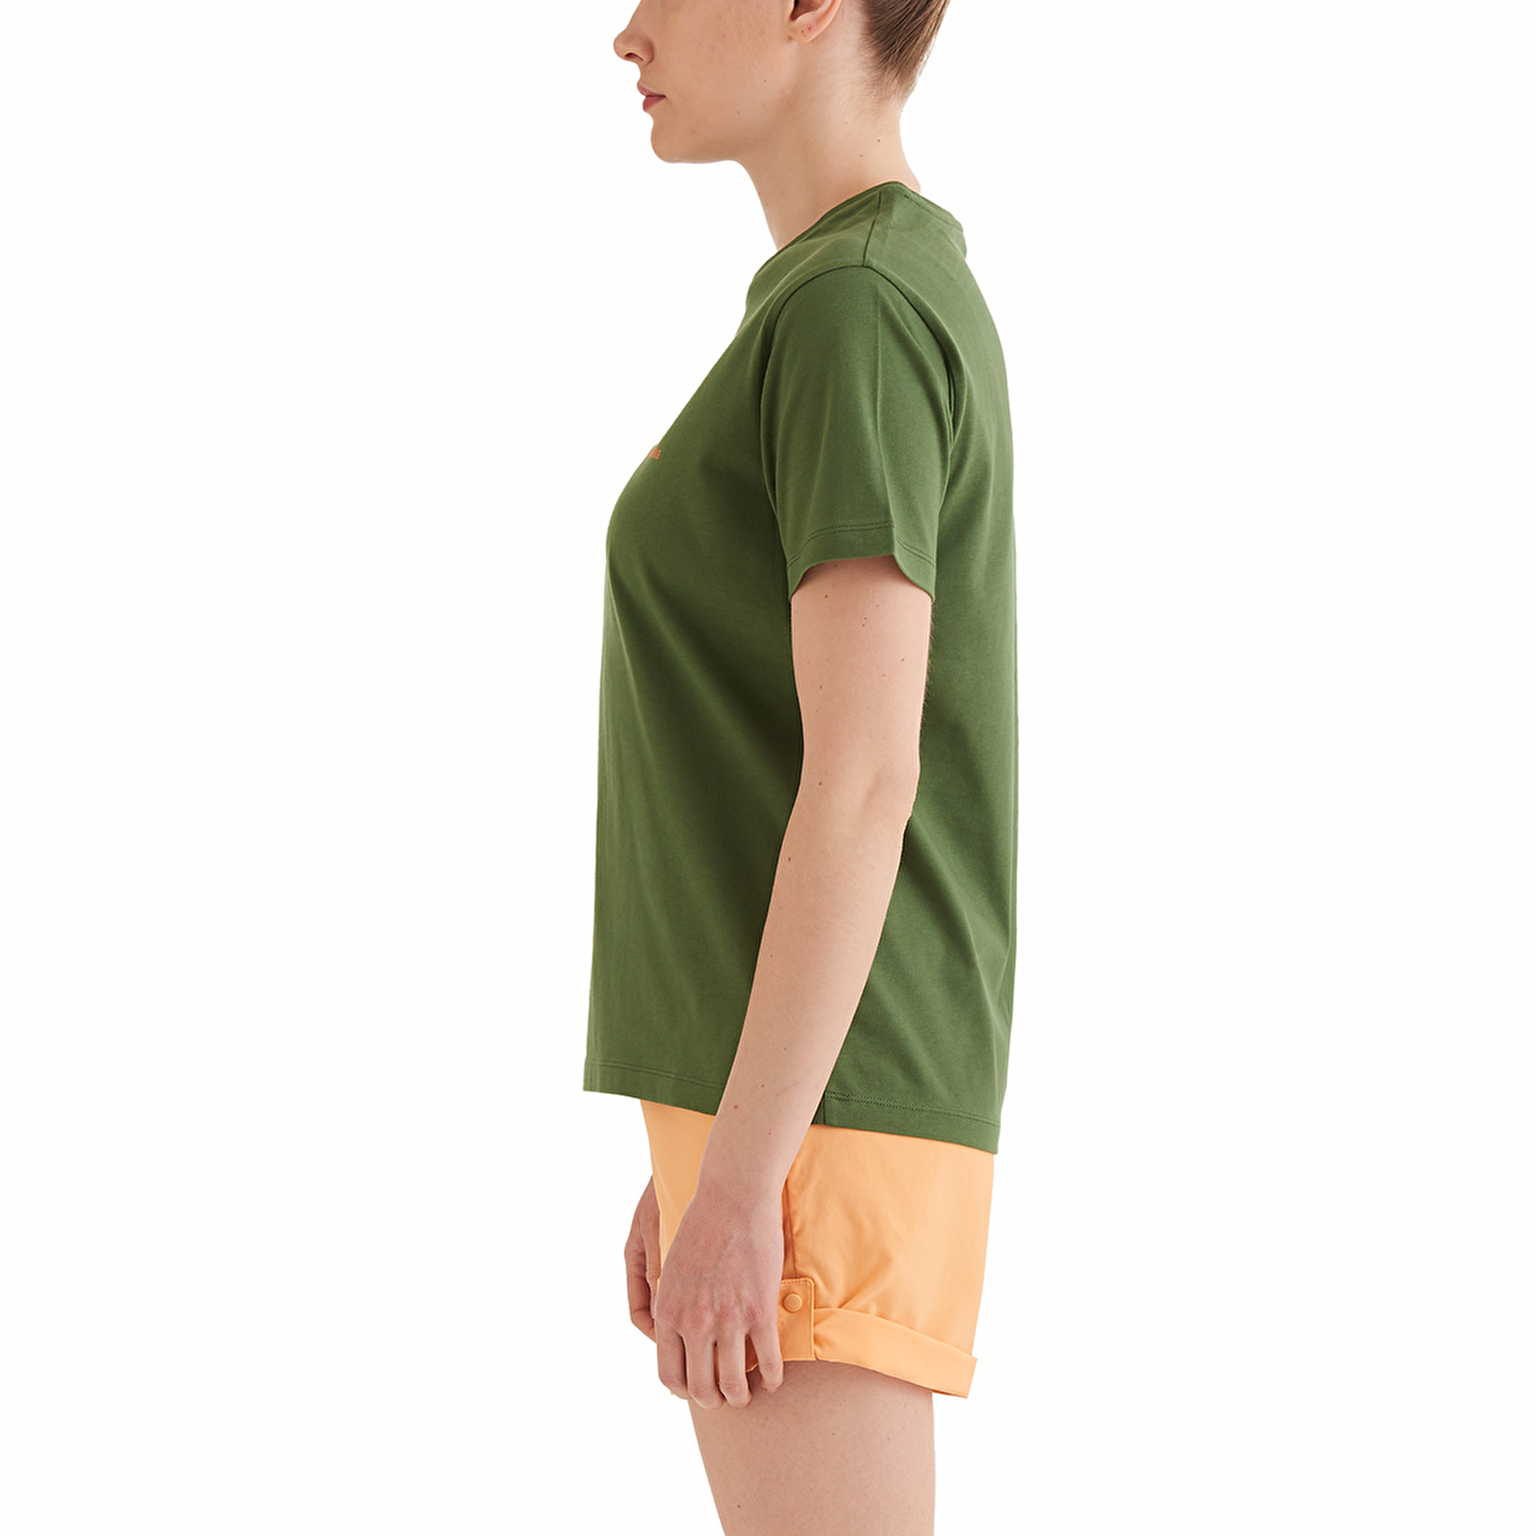 CSC Stacked Mini Gem Logo Kadın Kısa Kollu T-Shirt